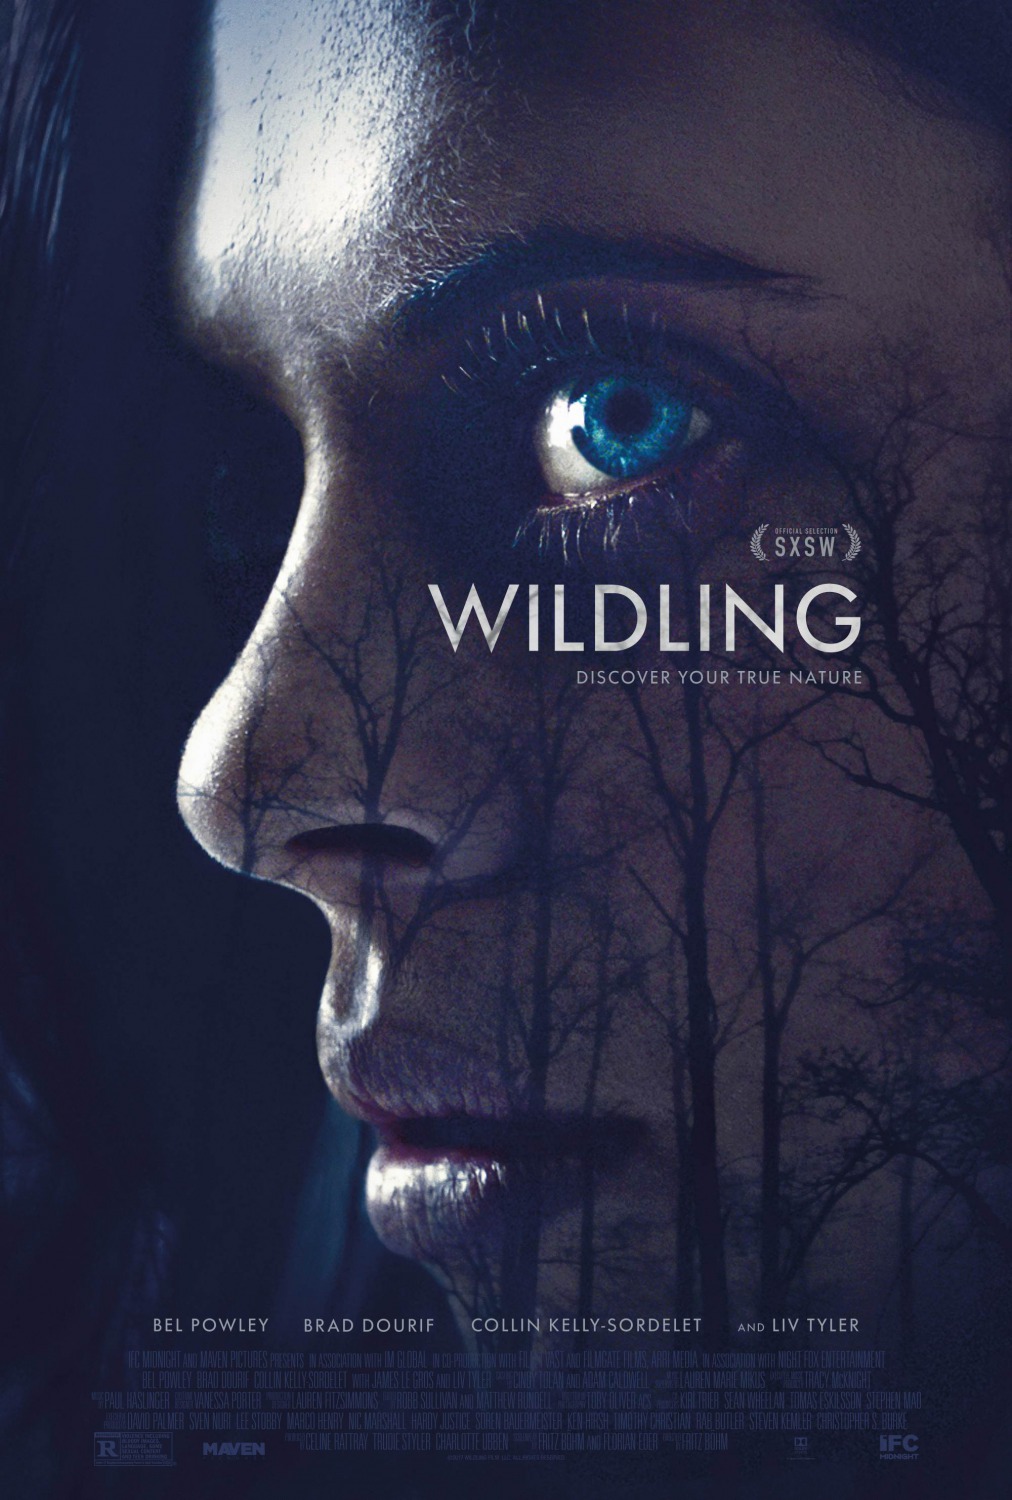 Nonton film Wildling layarkaca21 indoxx1 ganool online streaming terbaru